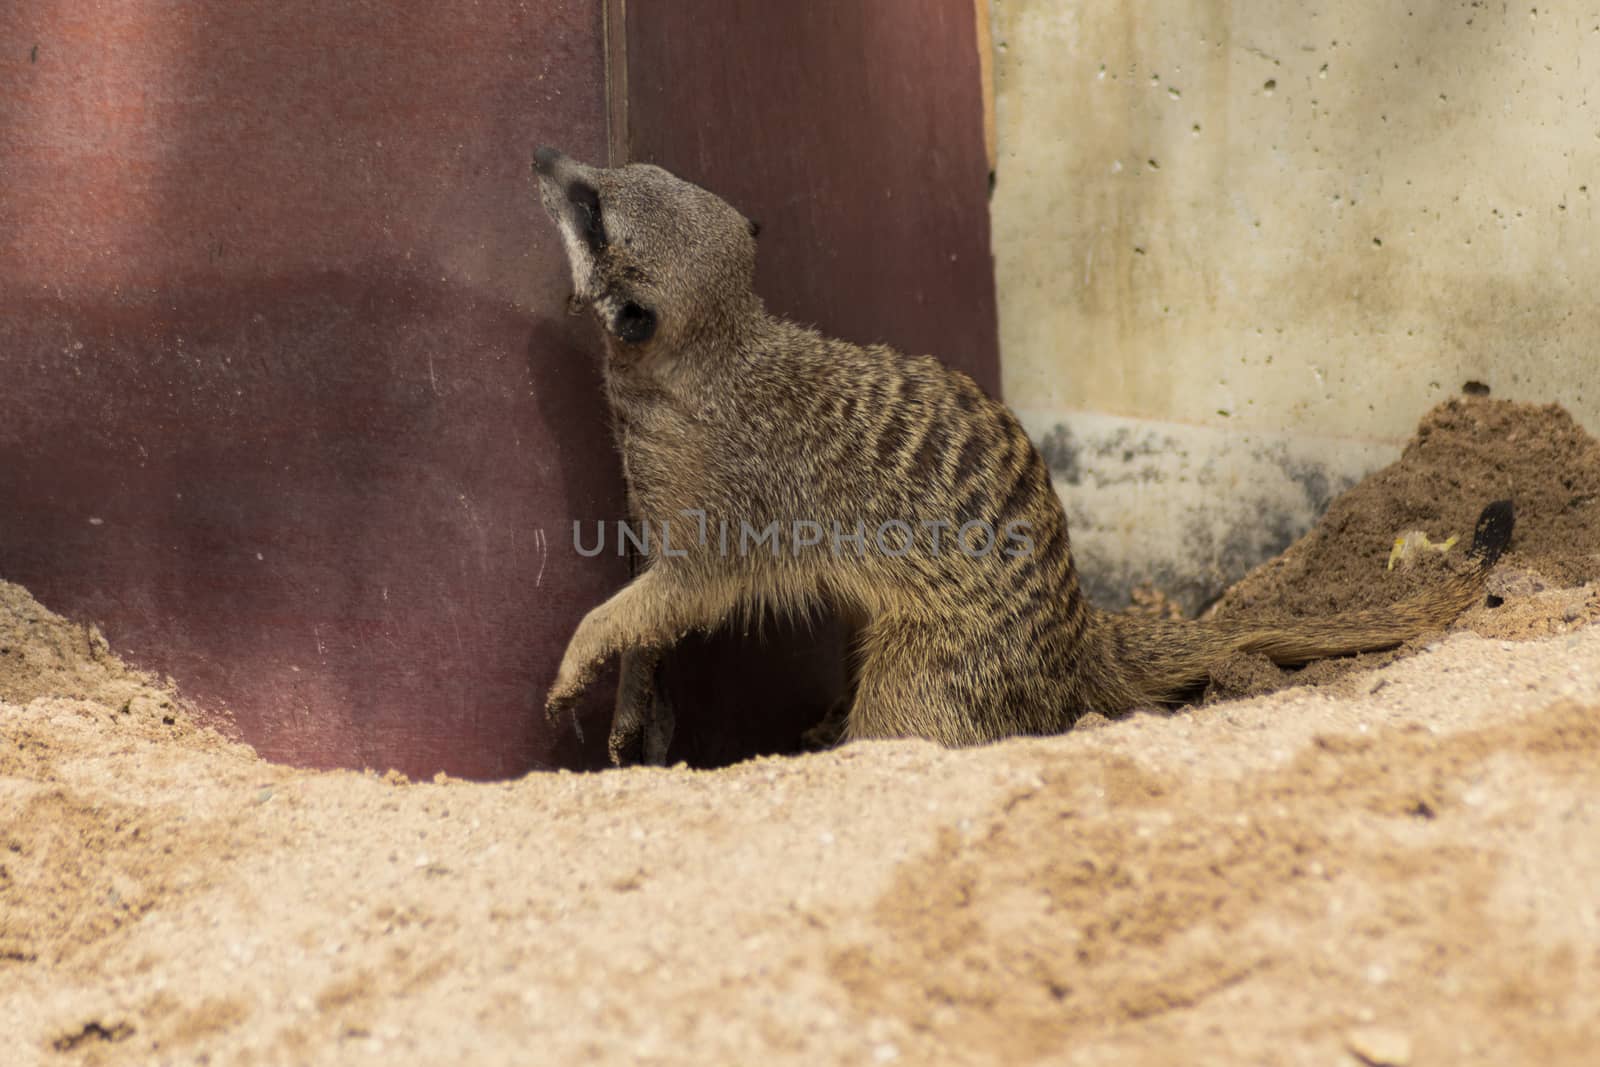 Meerkats on Sand by avn97